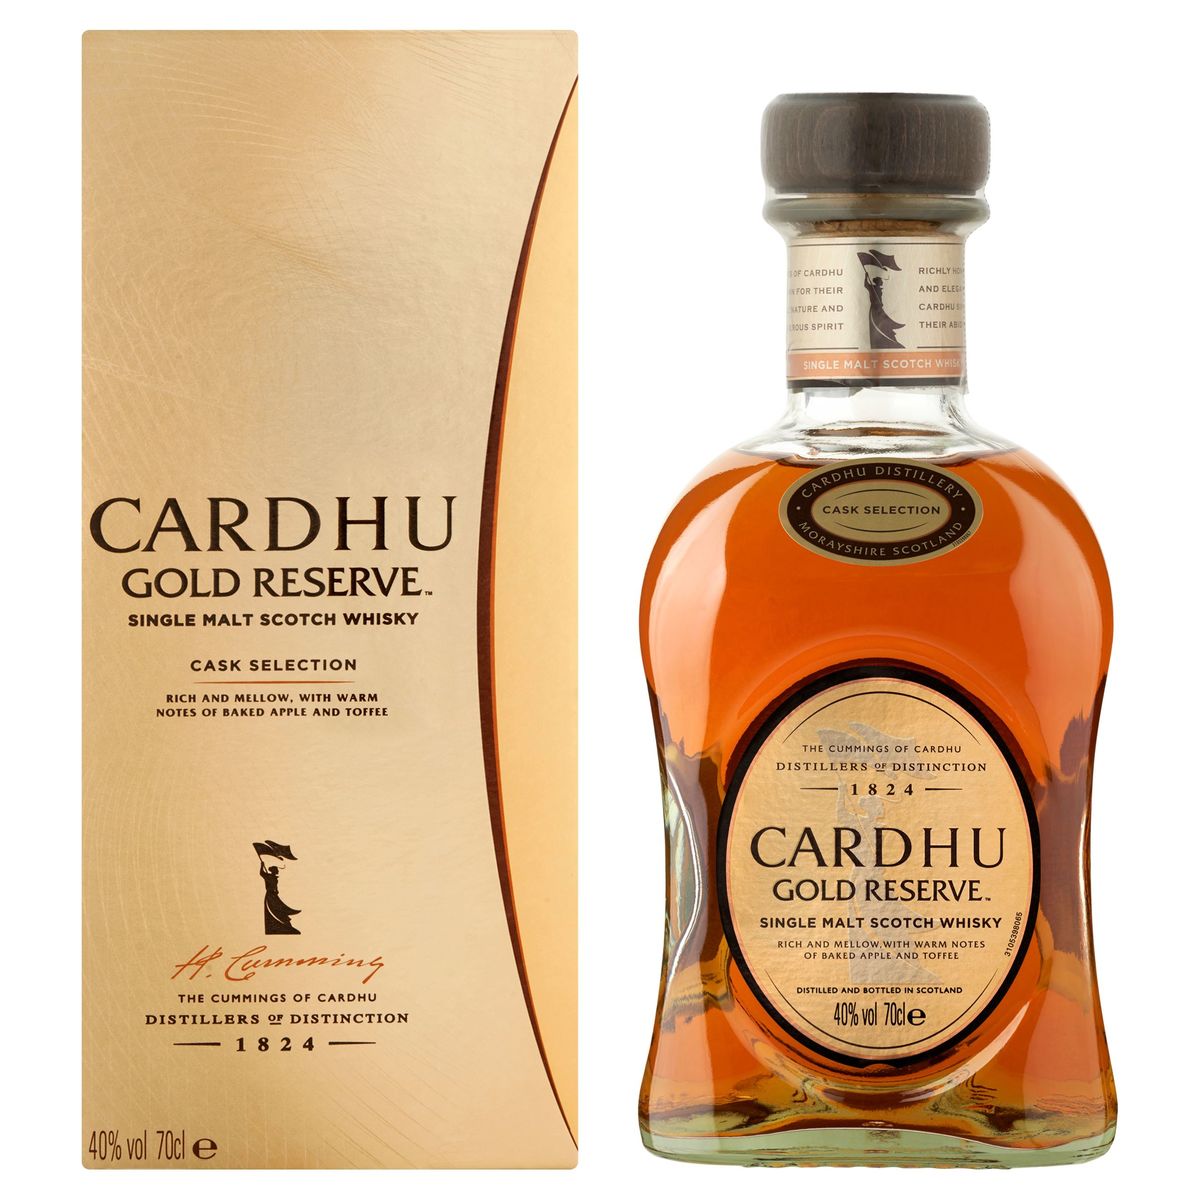 The Cardhu Cardhu Gold Reserve Cask Selection Single Malt Scotch